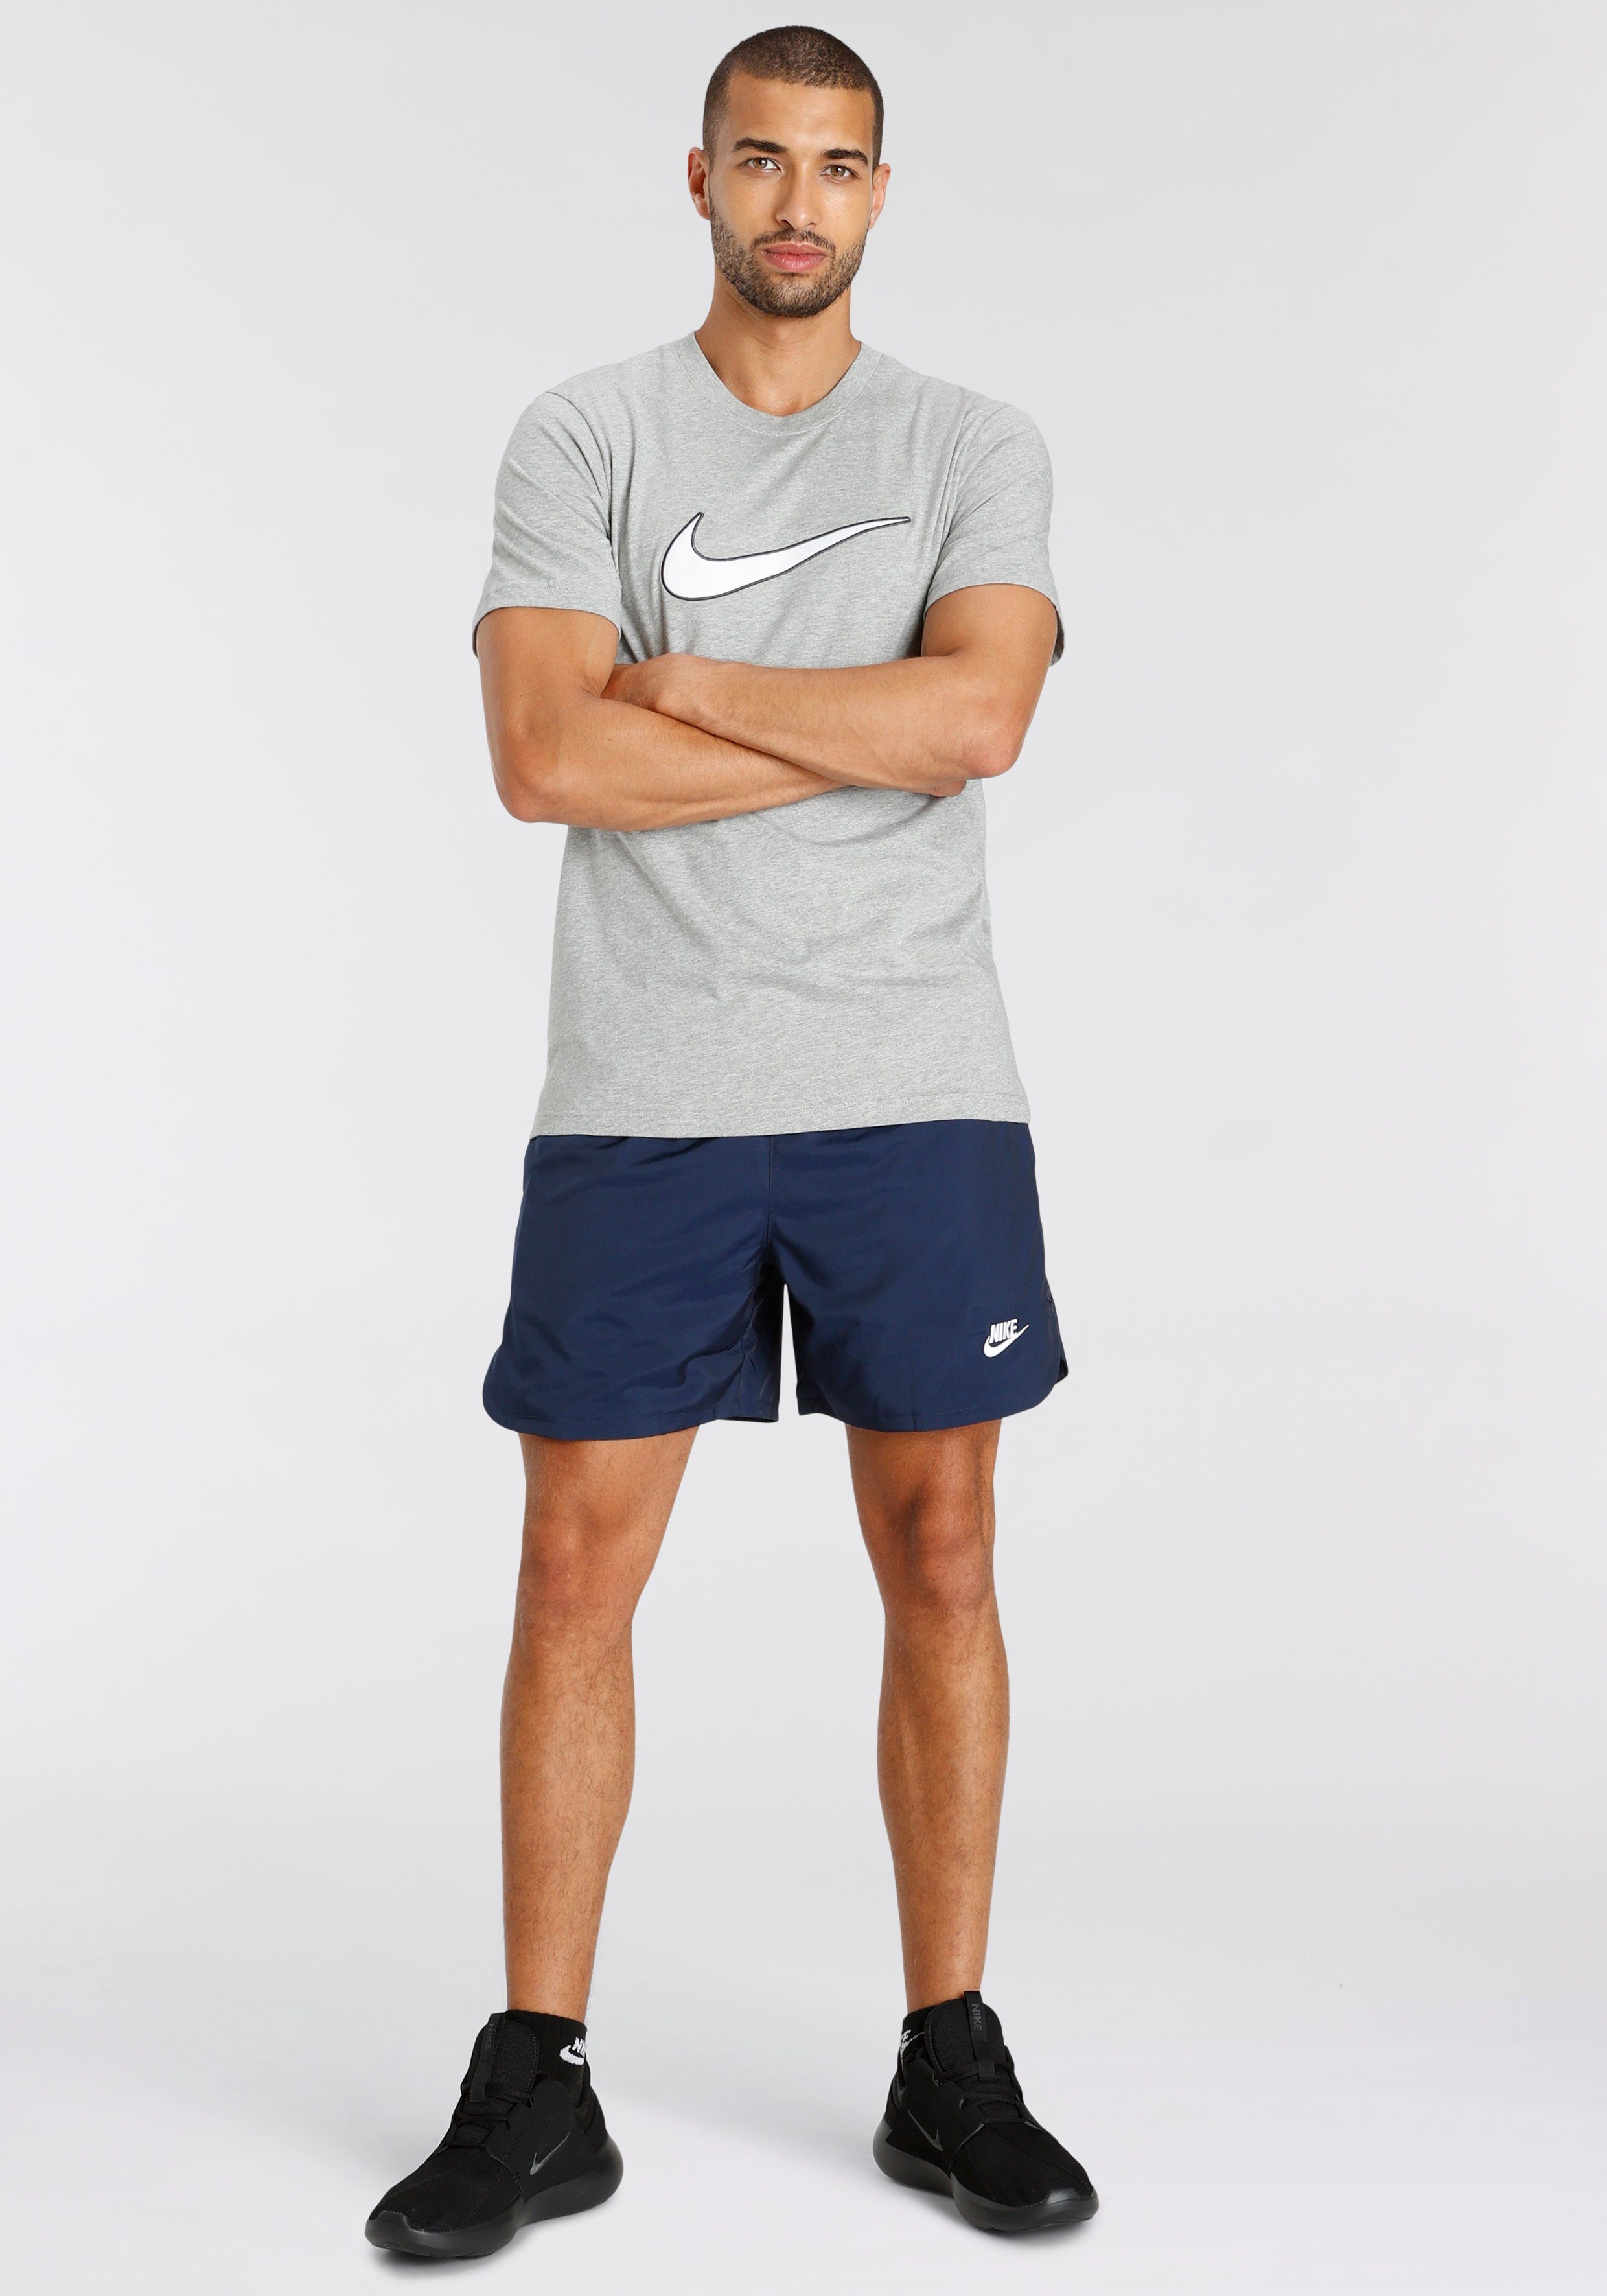 Nike DK SS M TOP GREY NSW HEATHER Sportswear T-Shirt SP